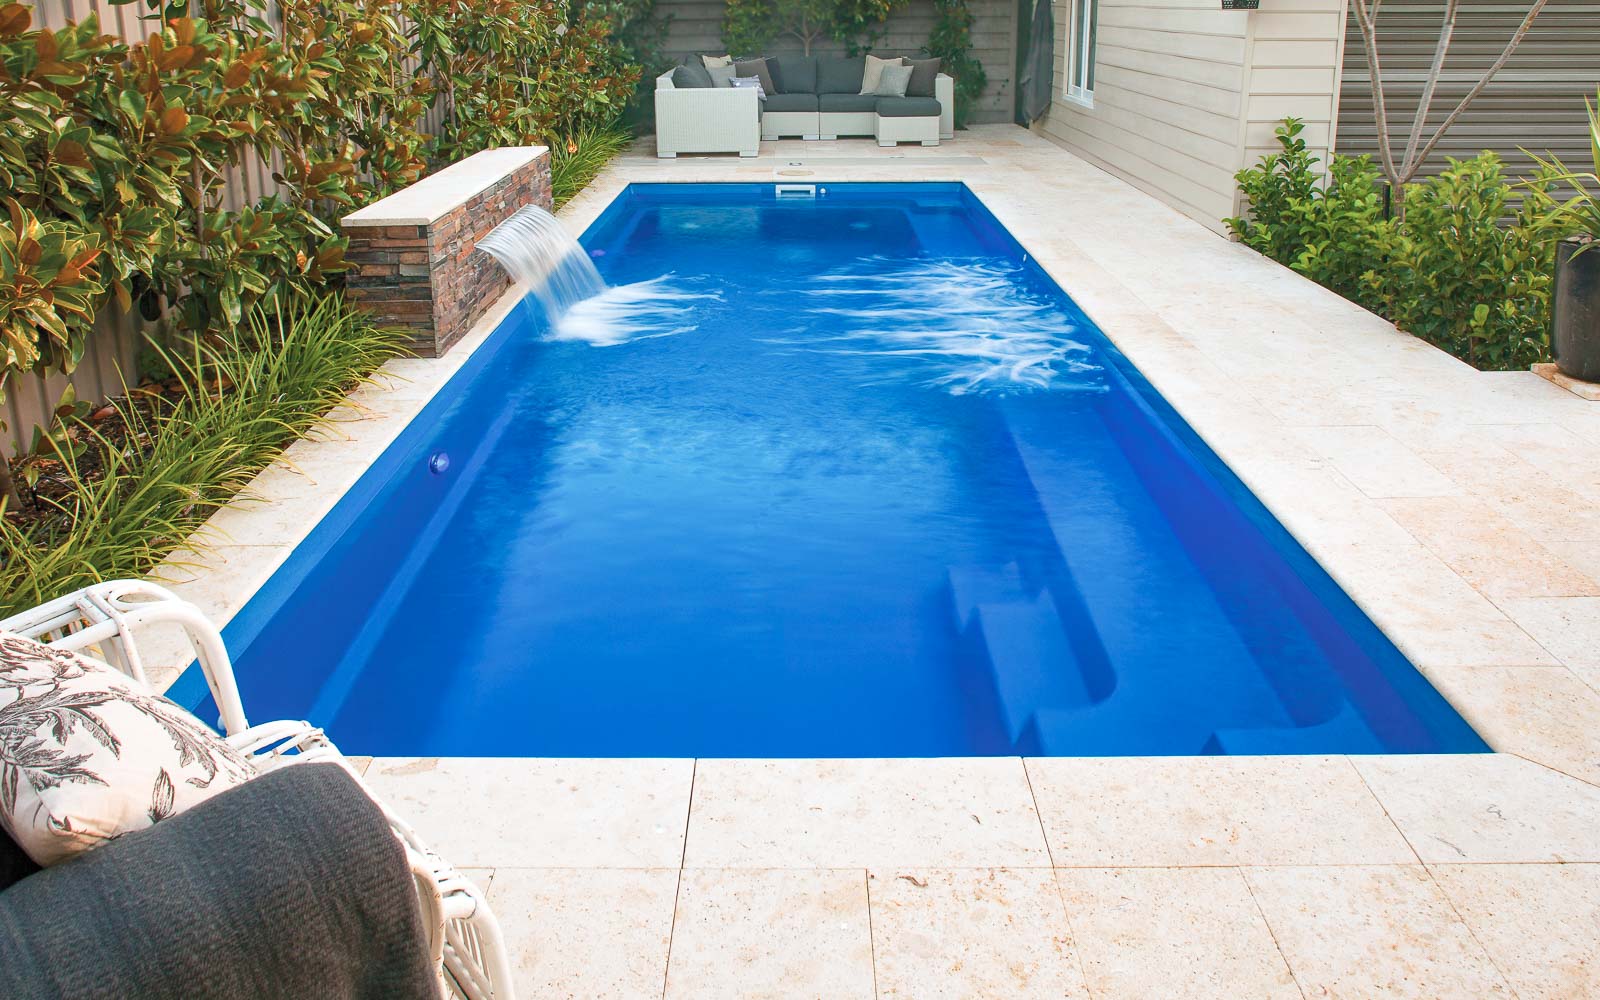 The Harmony, a classic style fiberglass pool 